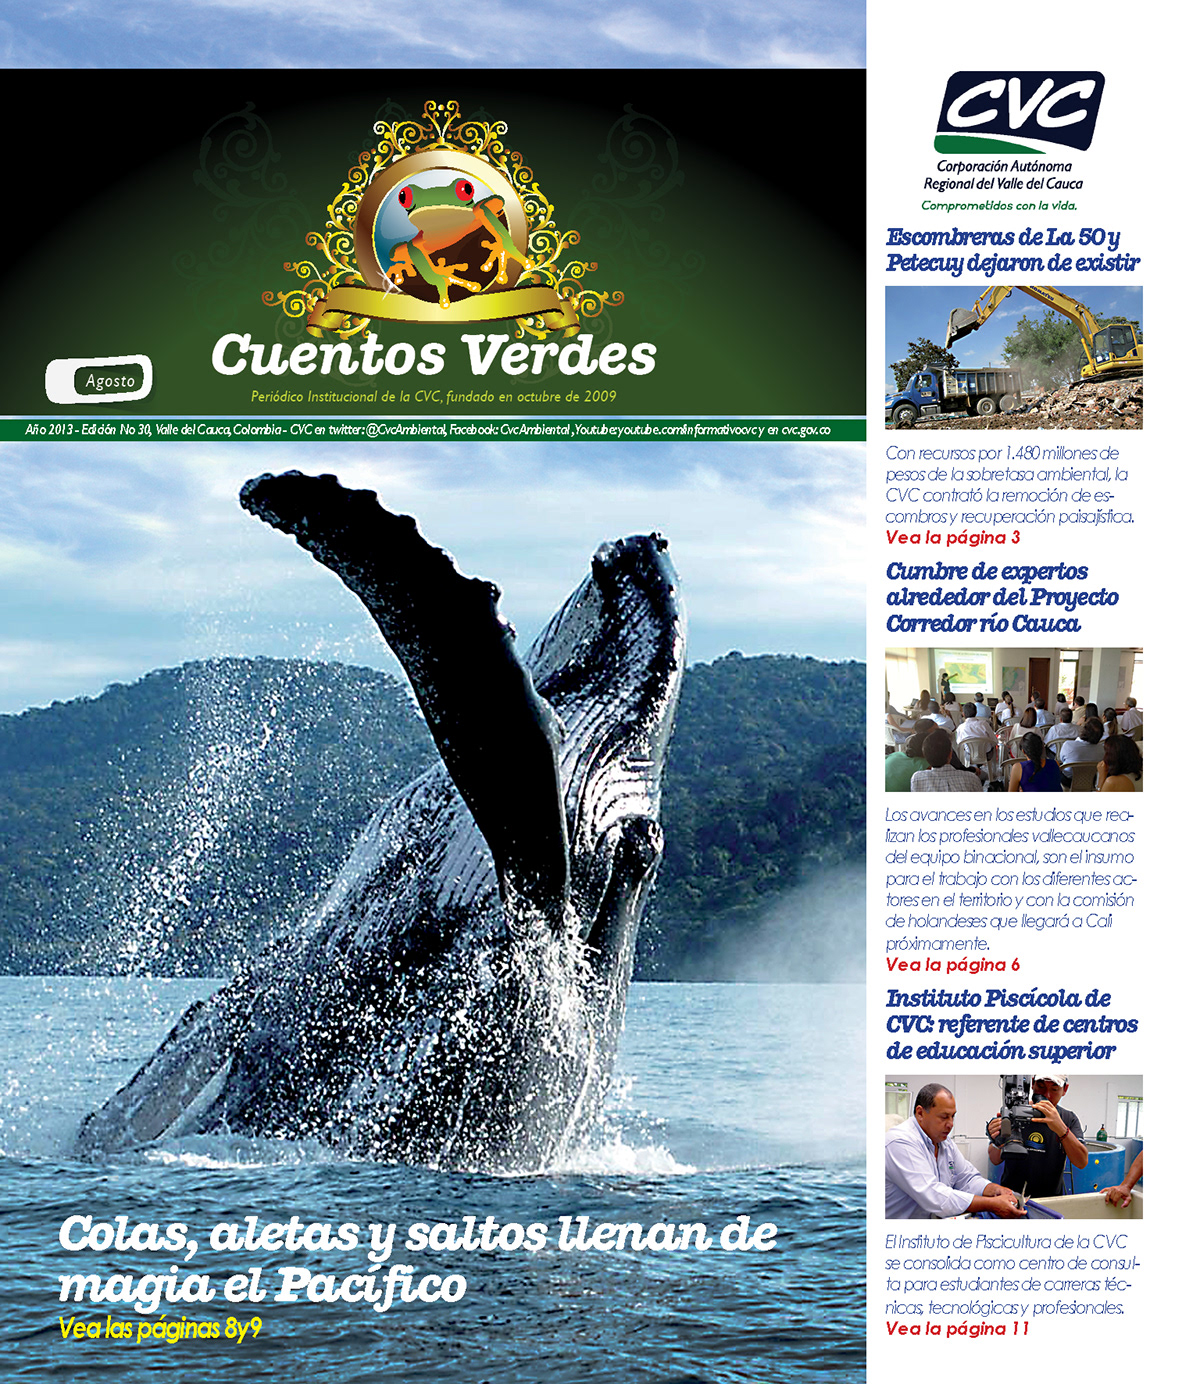 newspaper magazine colombia Latin latinoamerica CVC ecological design environment environmental design ambiental diseño ecologico sostenible